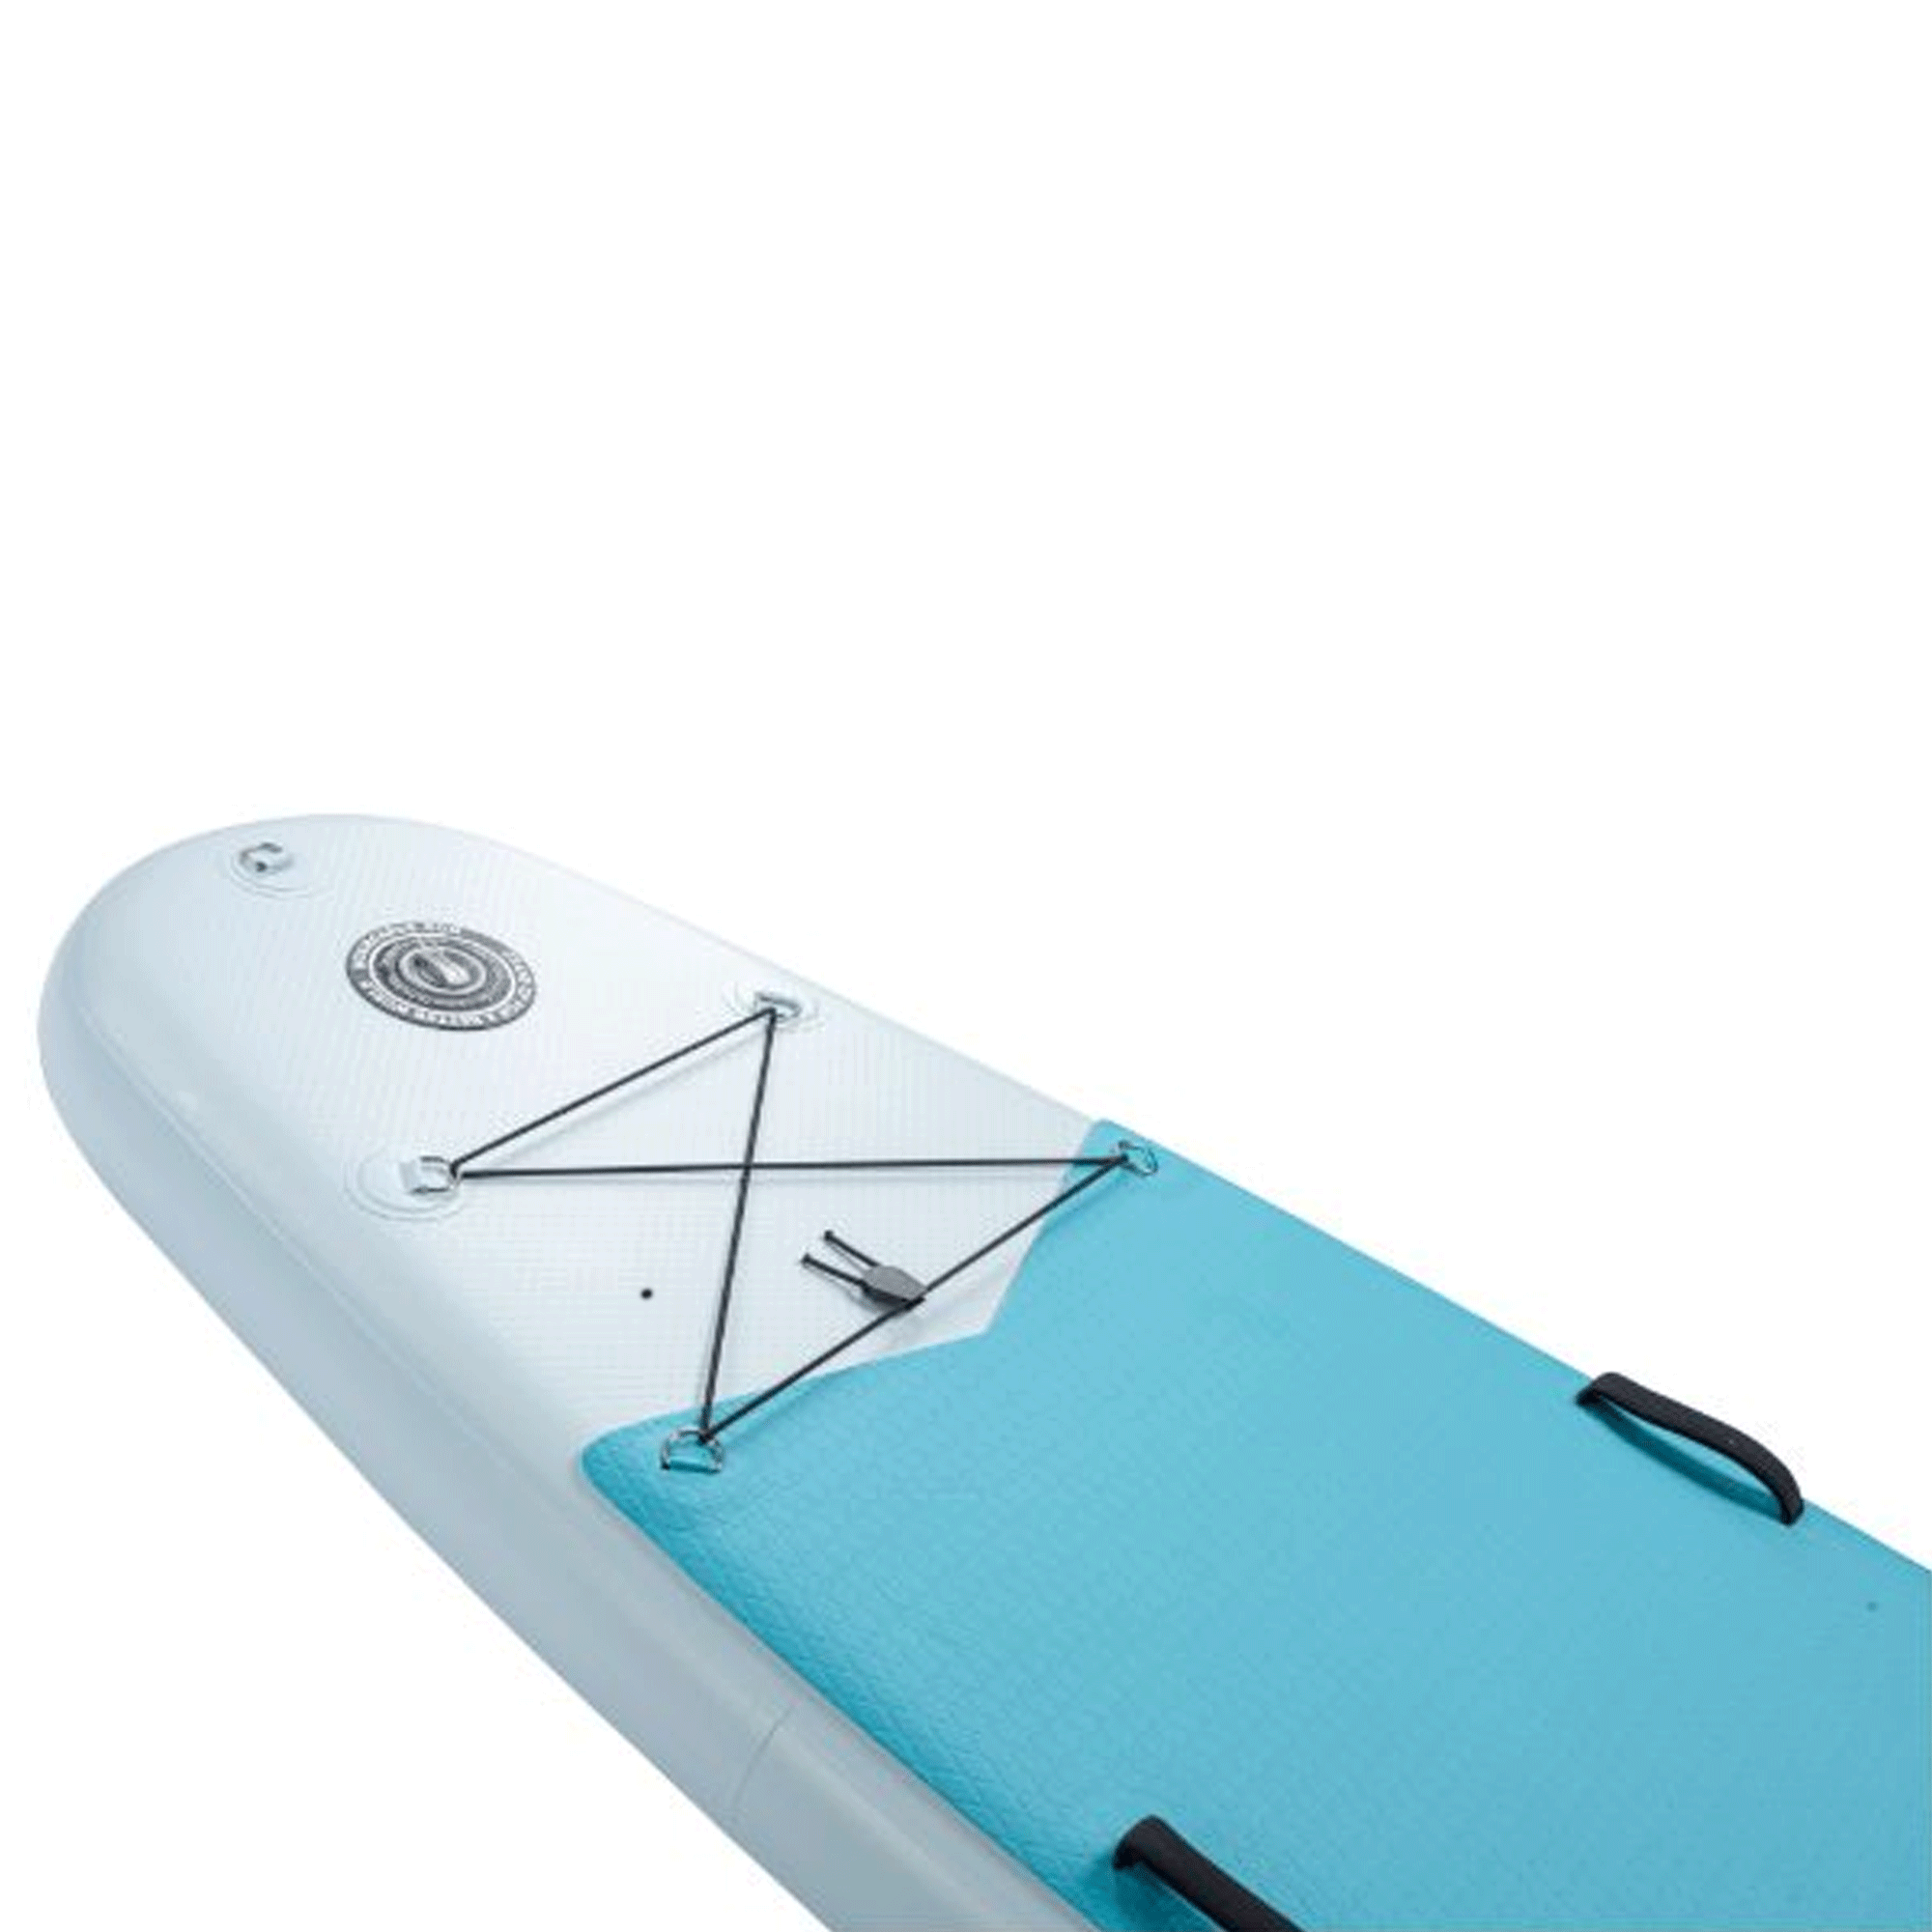 MOAI 12’4 package, US Finbox, Fiberglass paddle